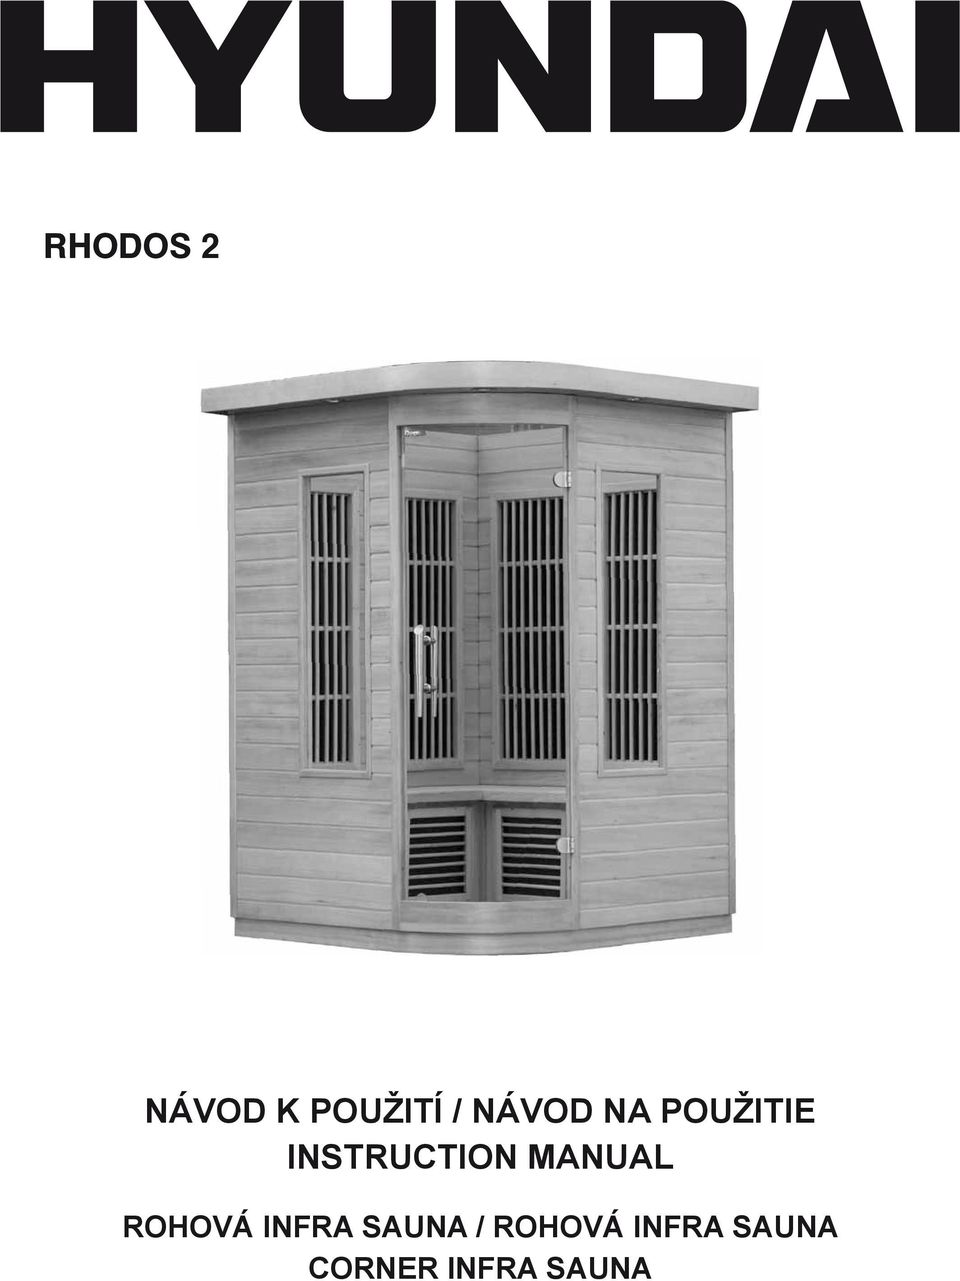 MANUAL Rohová infra sauna /